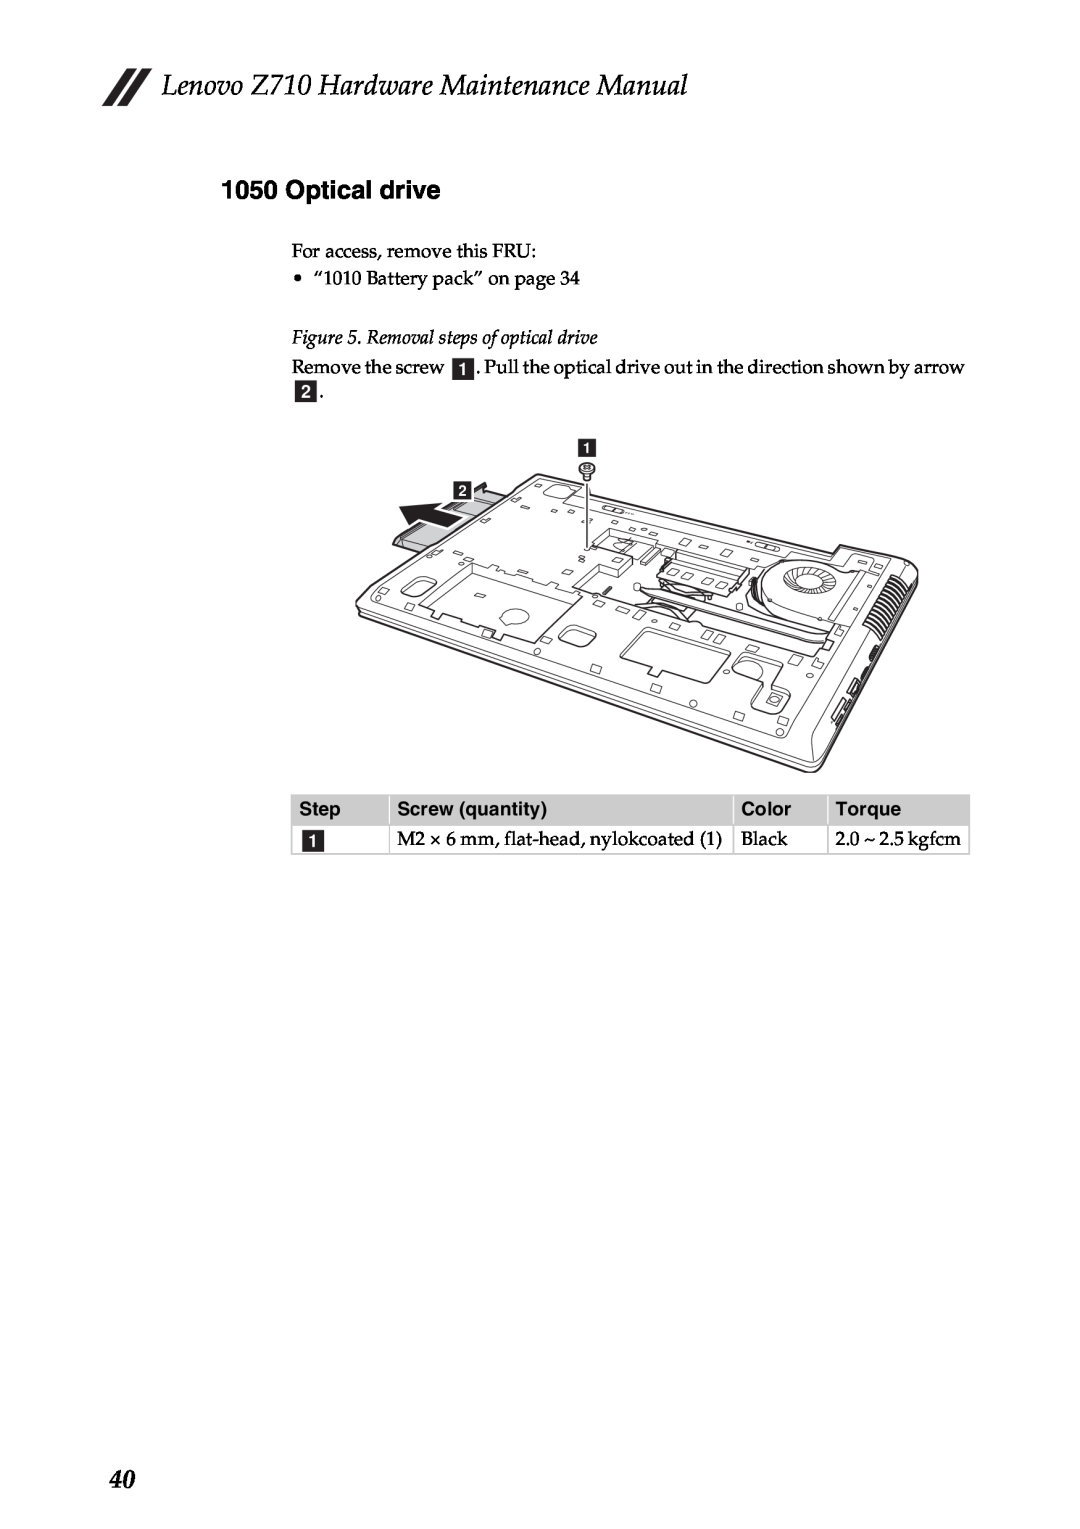 Lenovo manual Optical drive, Removal steps of optical drive, Lenovo Z710 Hardware Maintenance Manual 